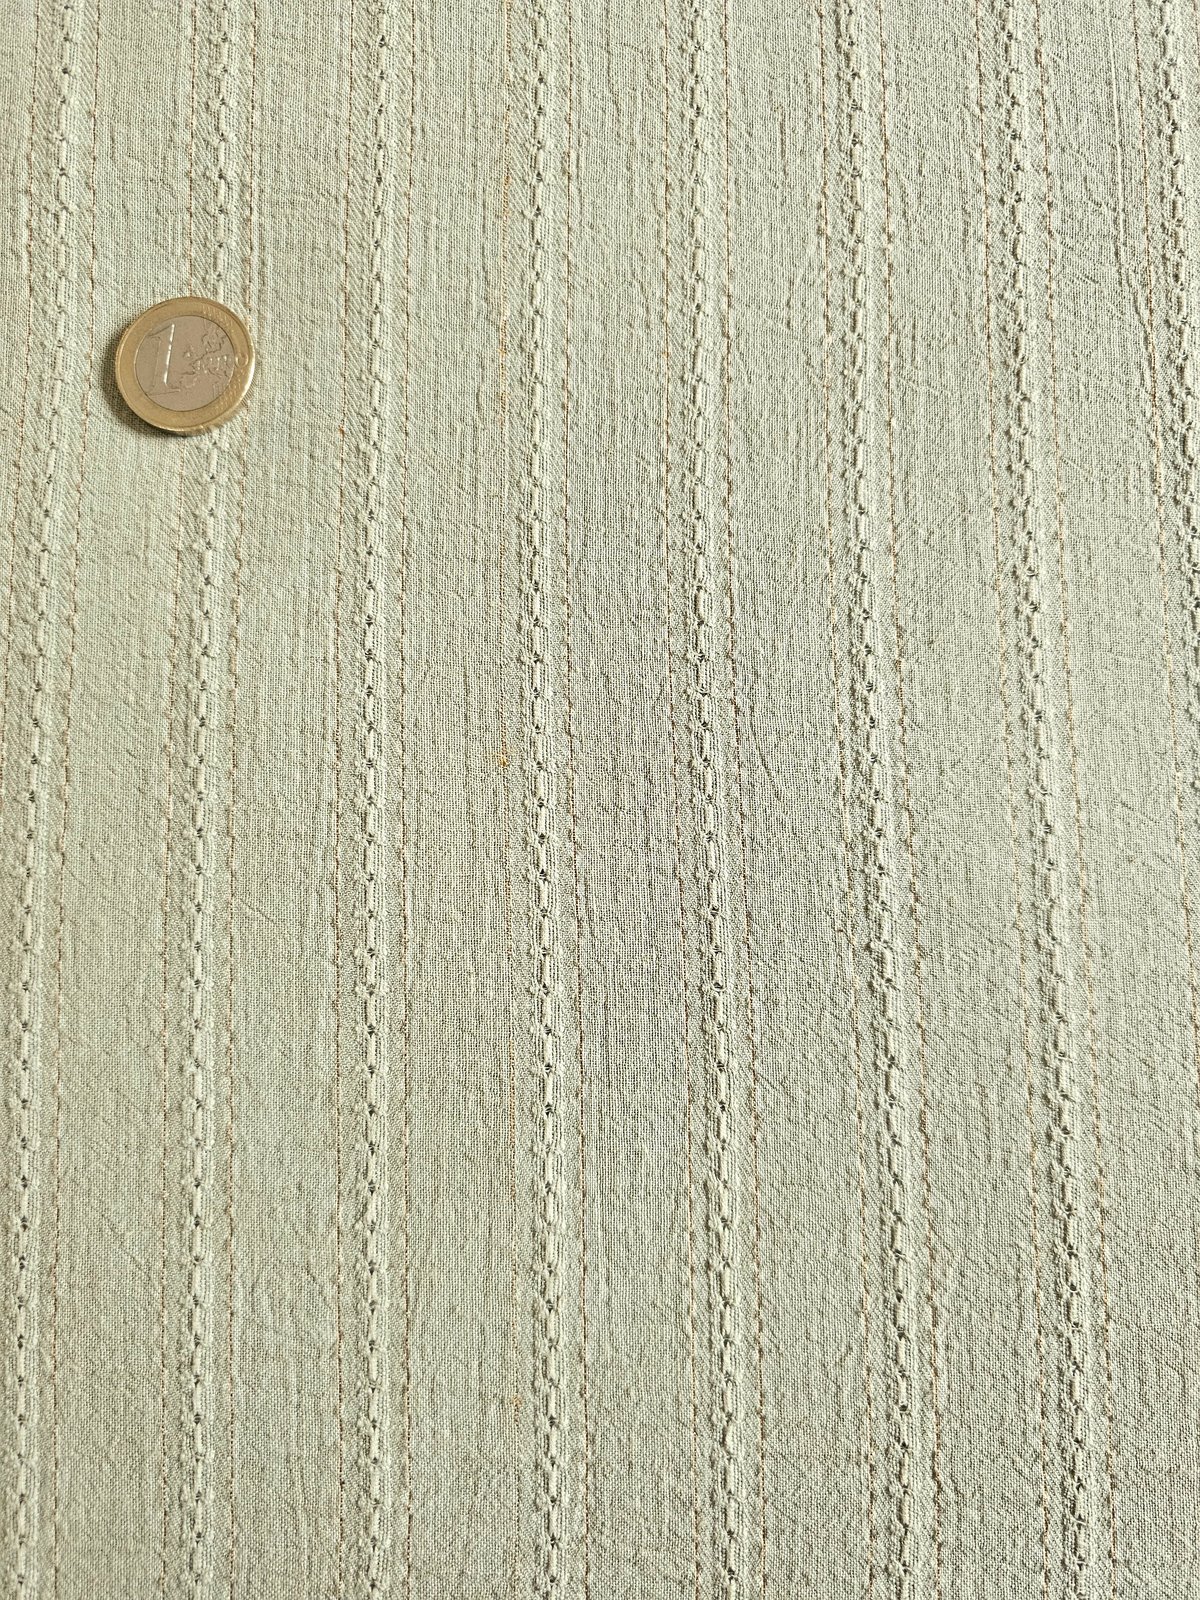 Image of Namaste fabric dobby vert pâle lurex